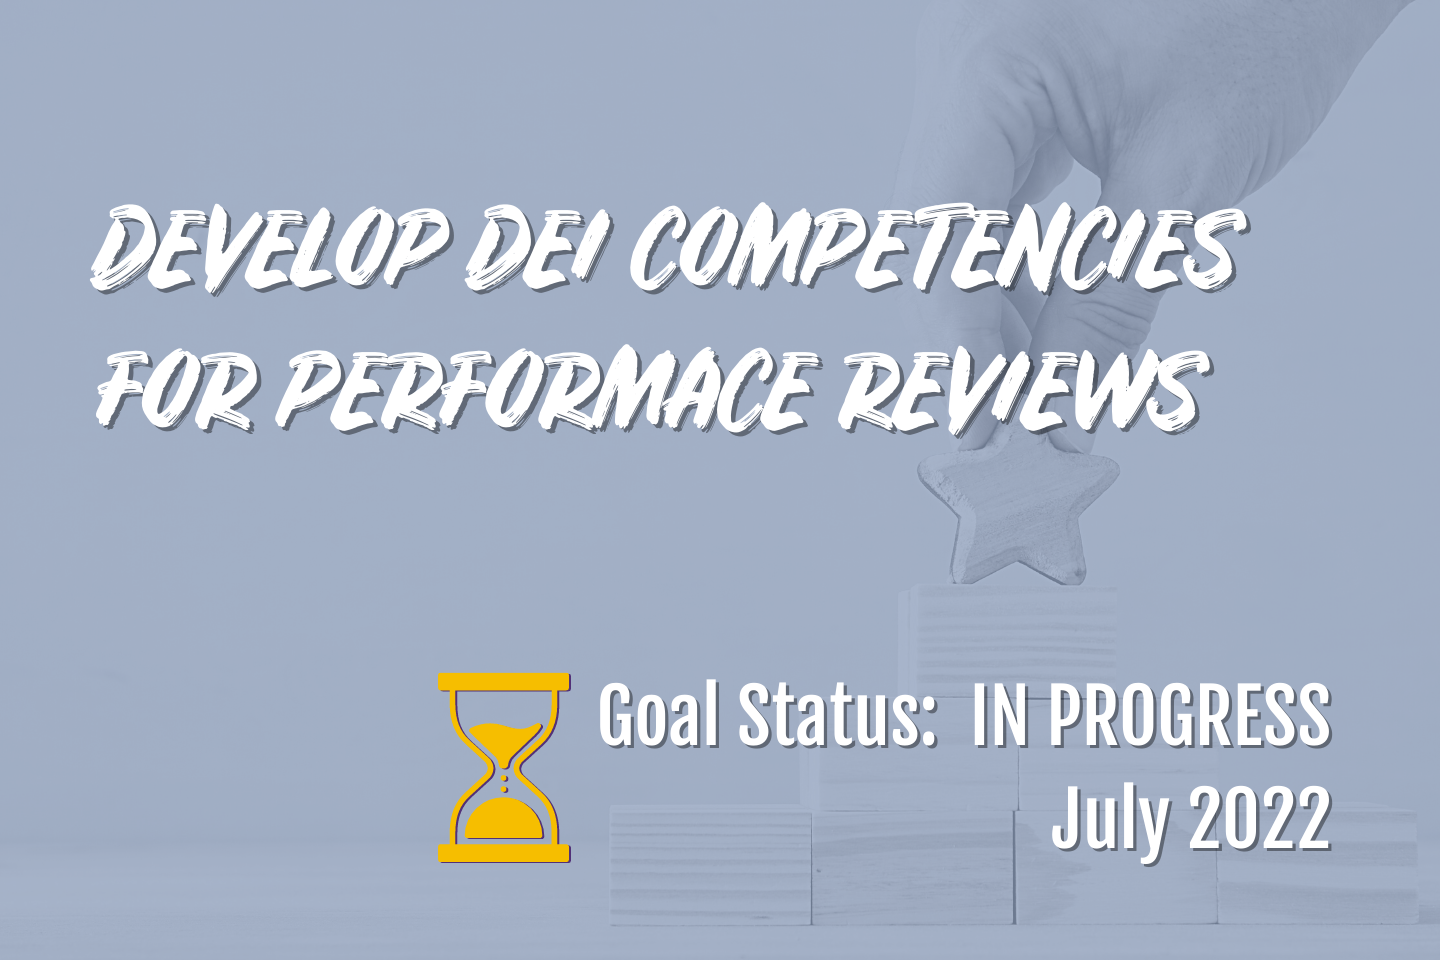 Develop DEI competencies for Performance Reviews